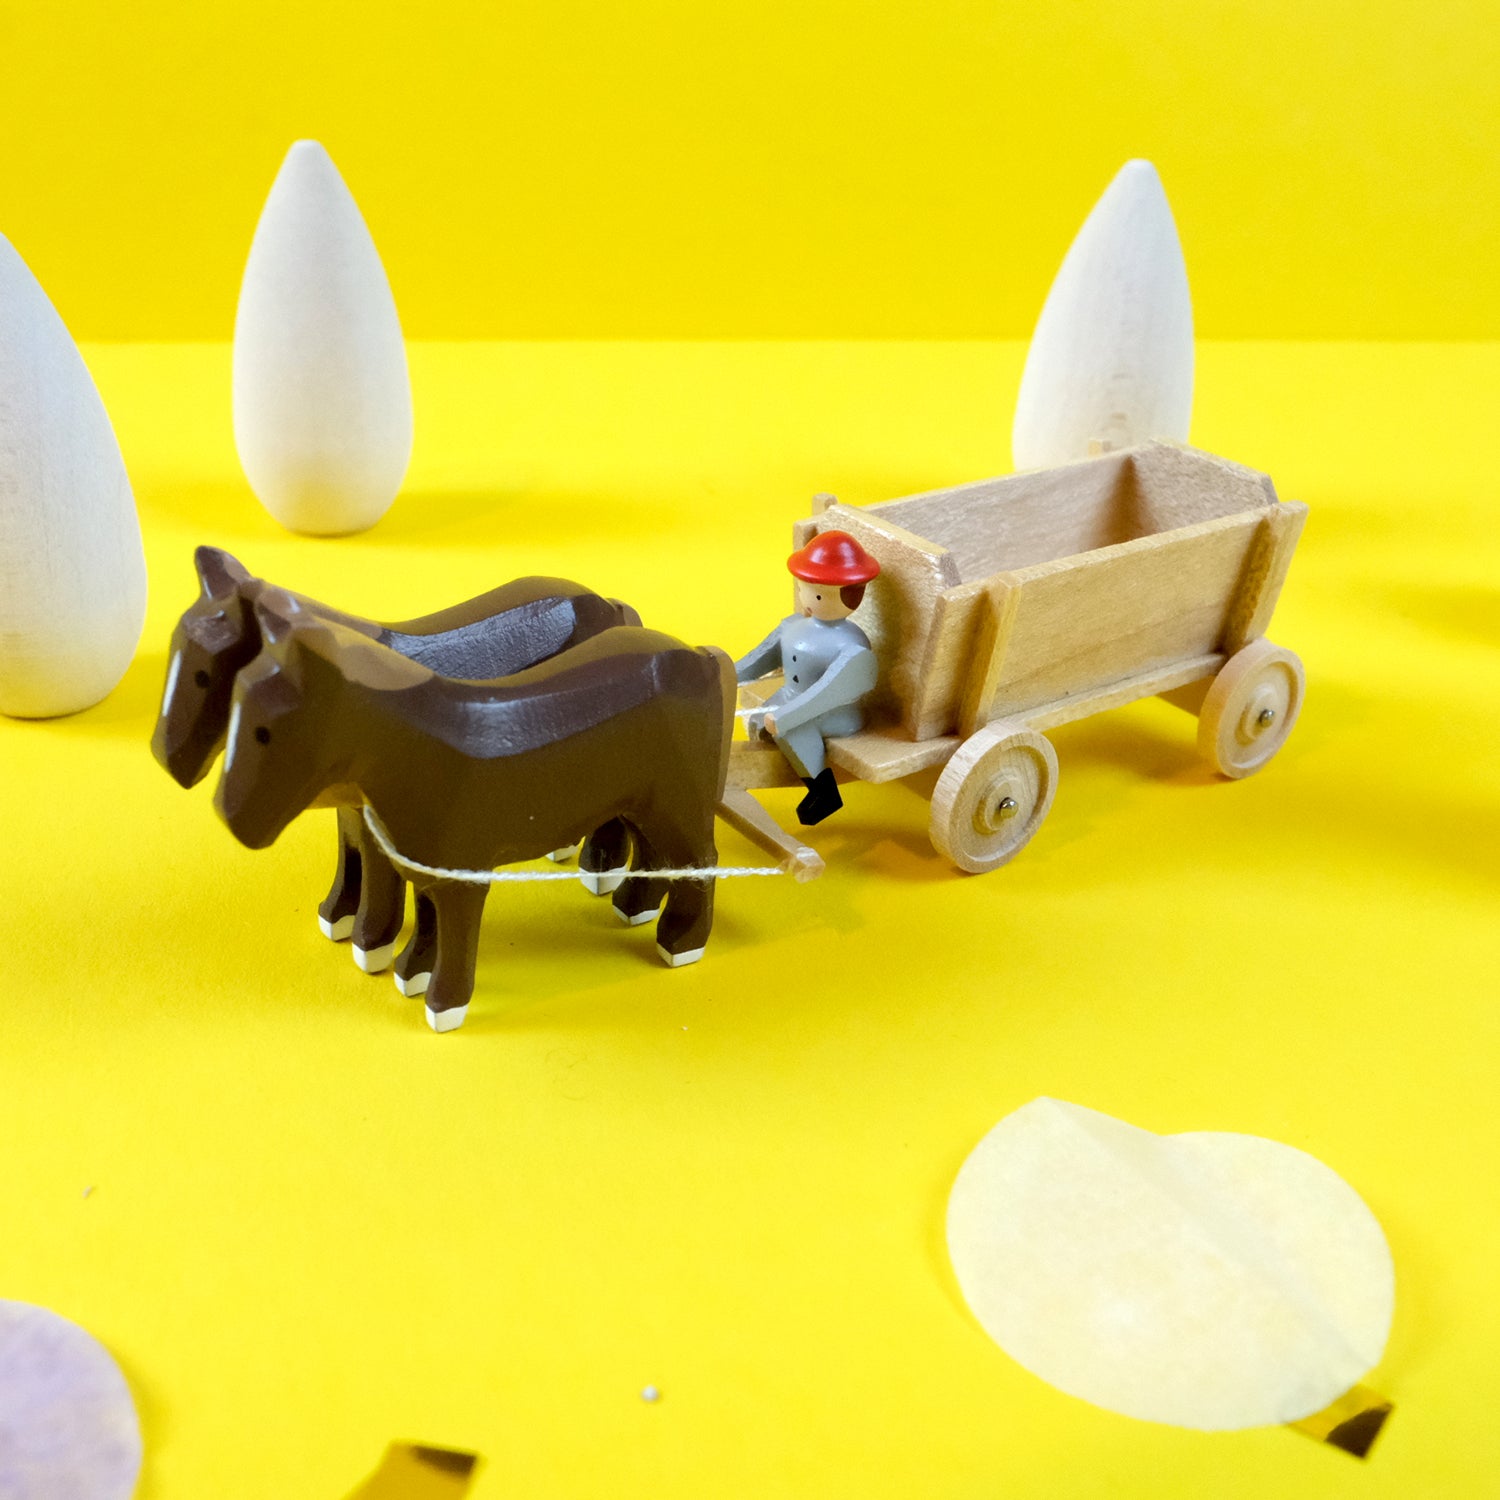 Horse-drawn carriage  miniature